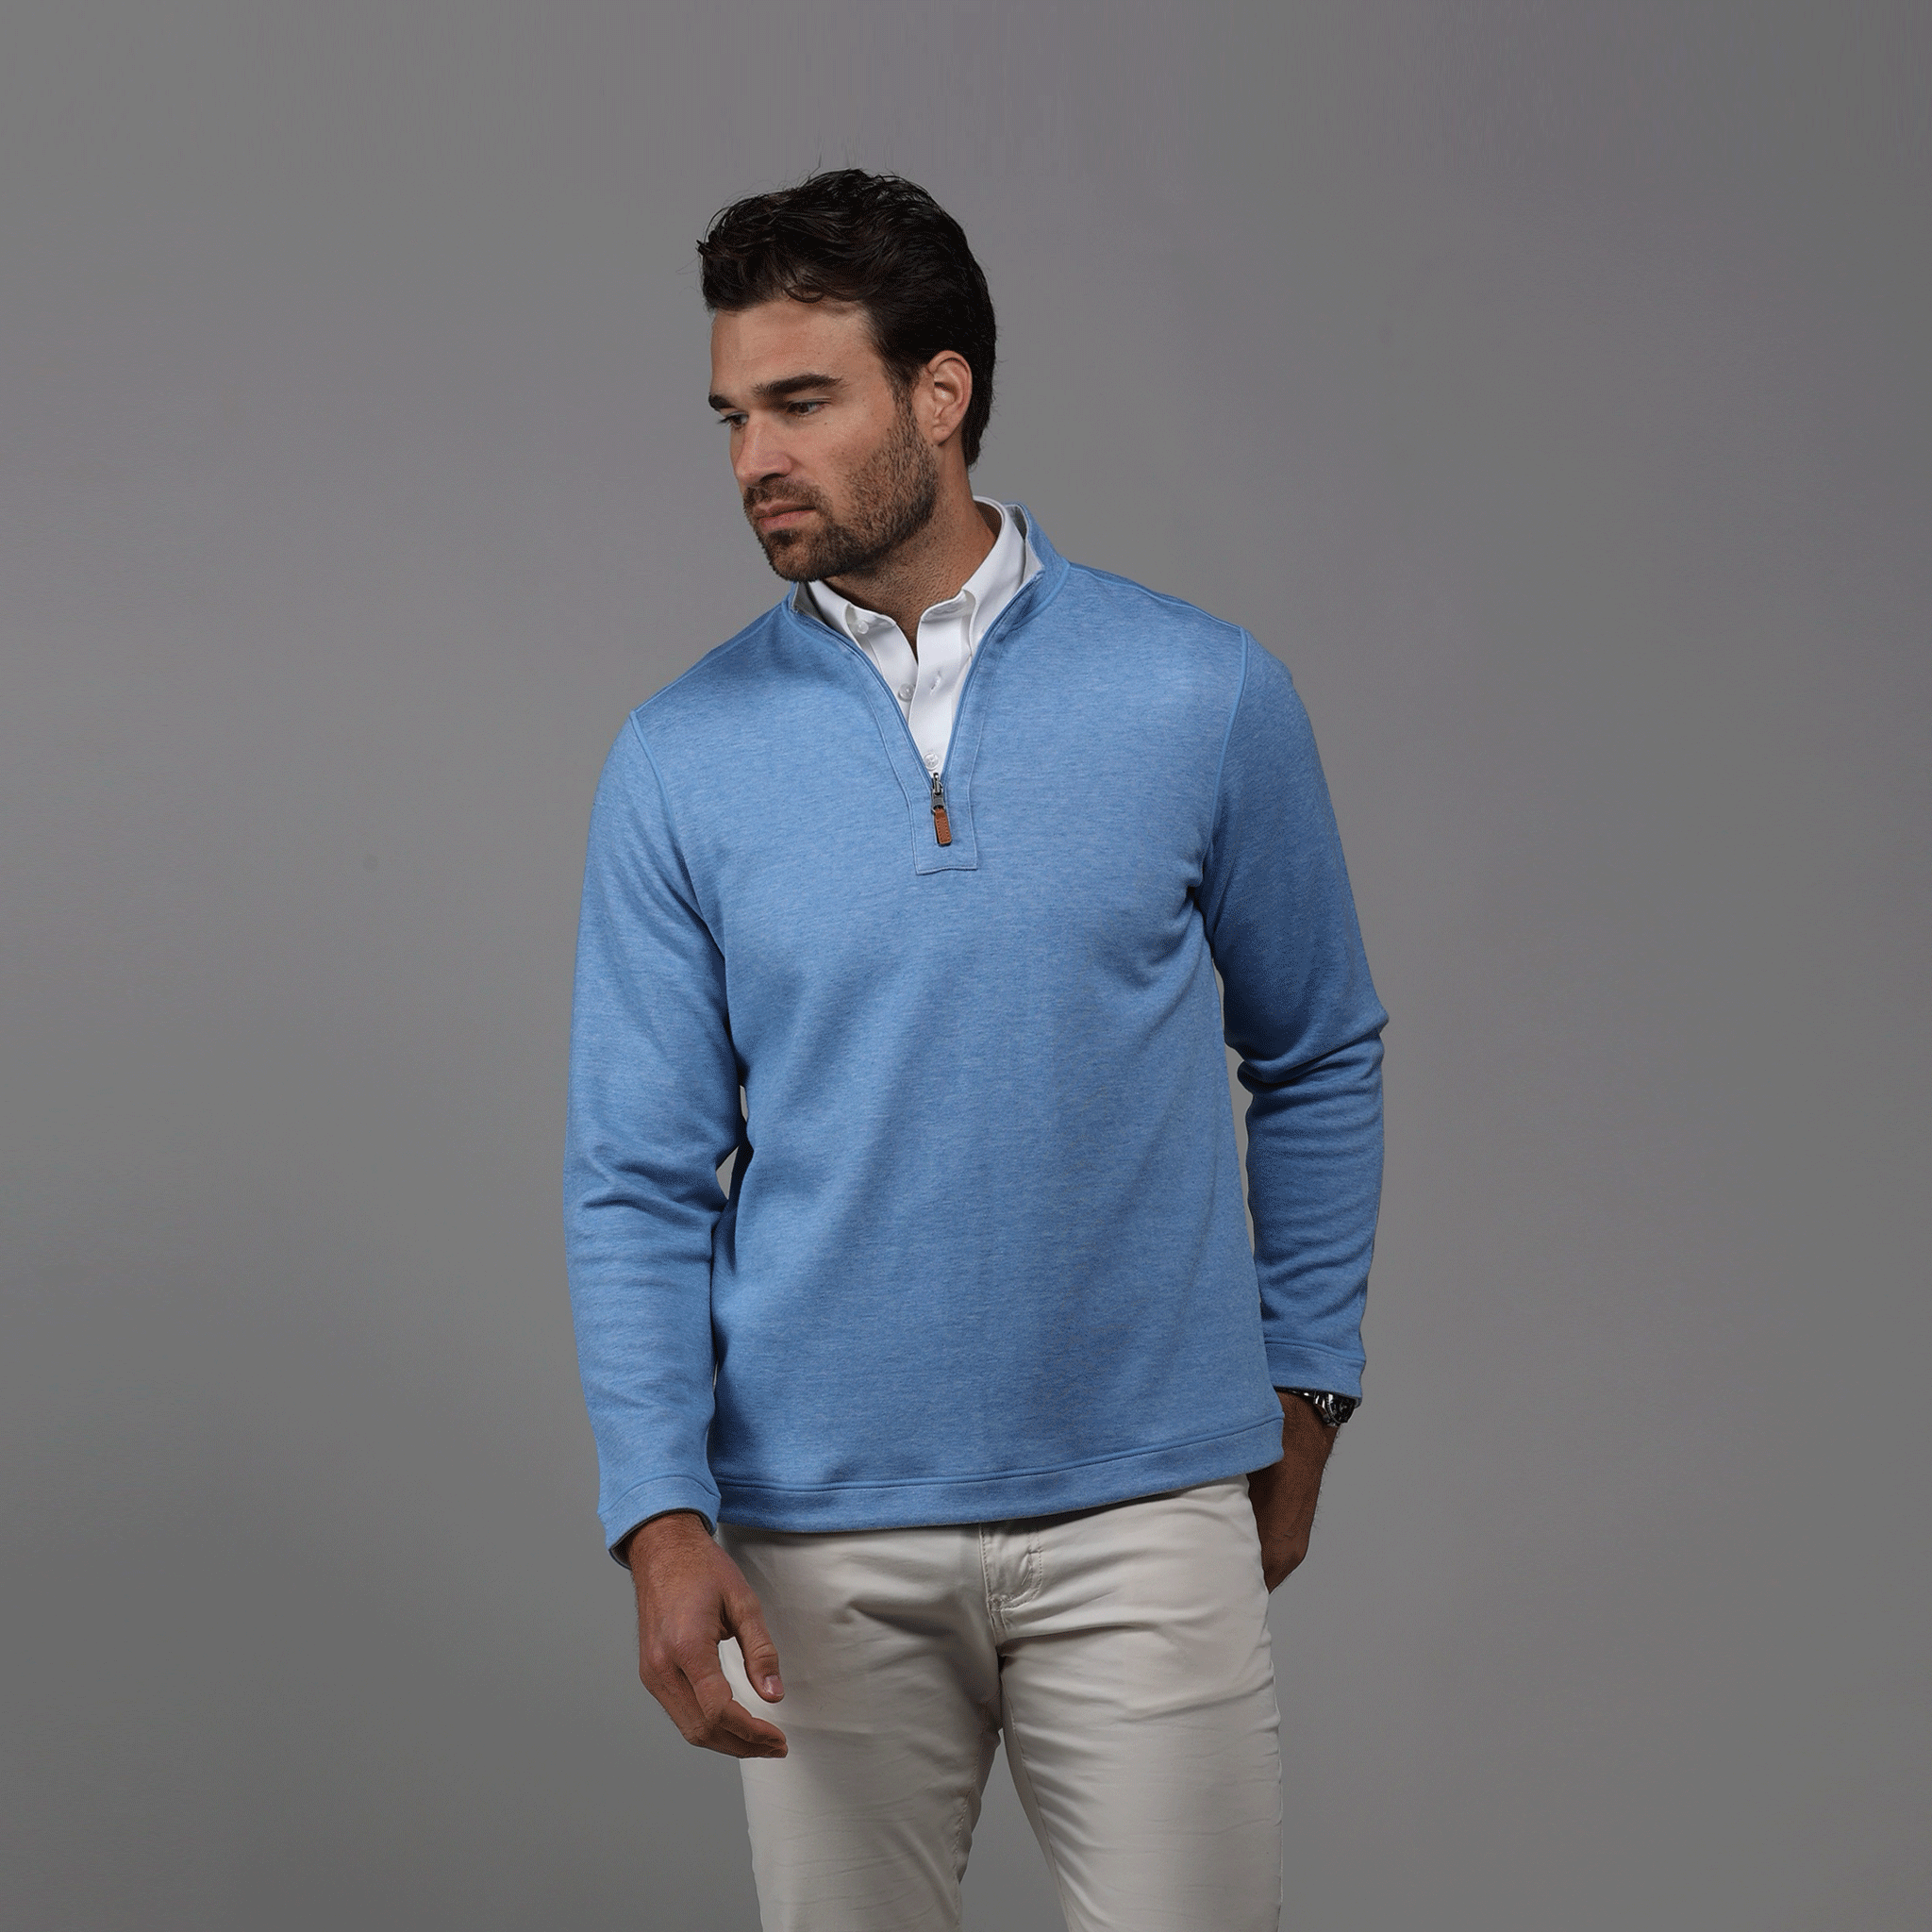 Sky Blue and Light Grey Pullov Zip Cotton & – Collars Blend Zen Reversible Quarter